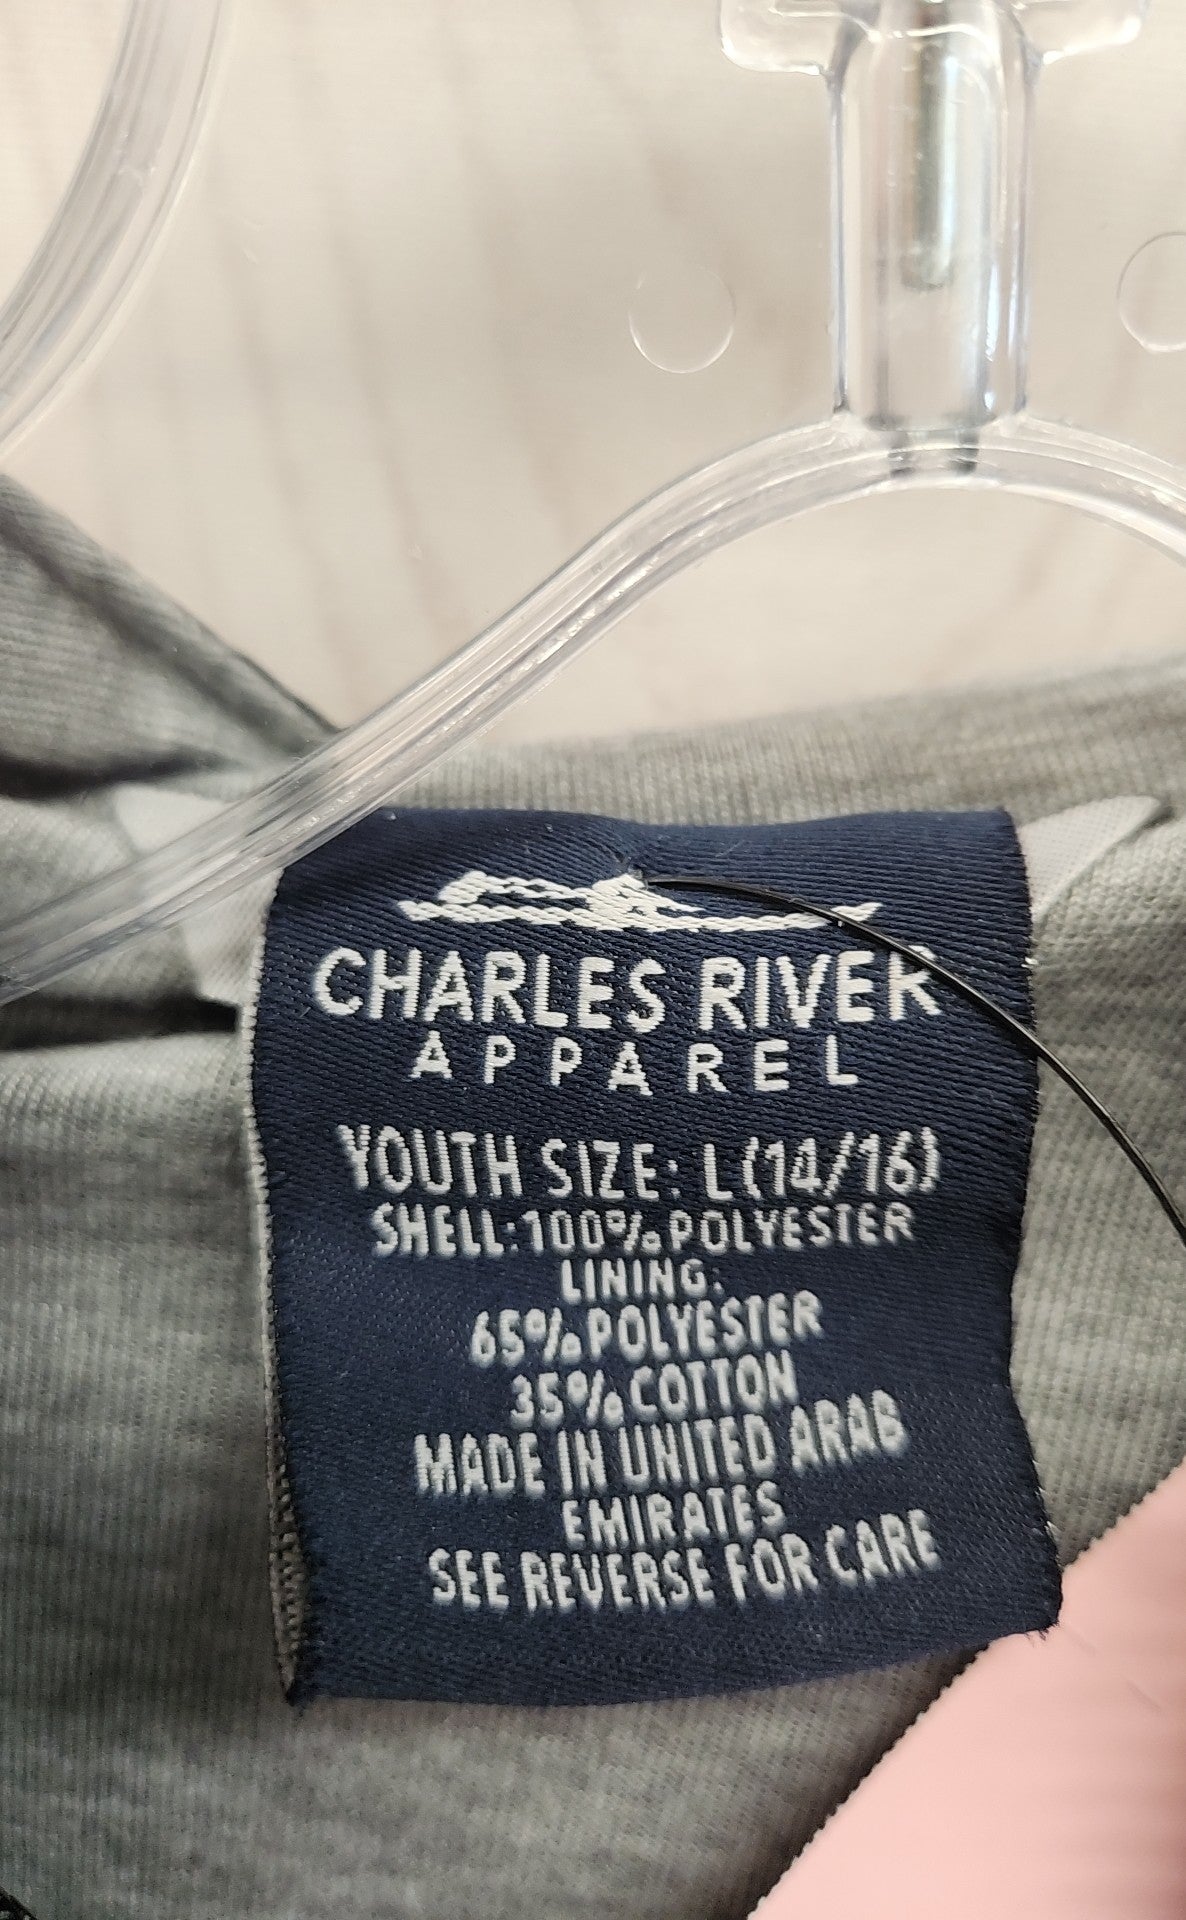 Charles River Boy's Size 14/16 Black Jacket